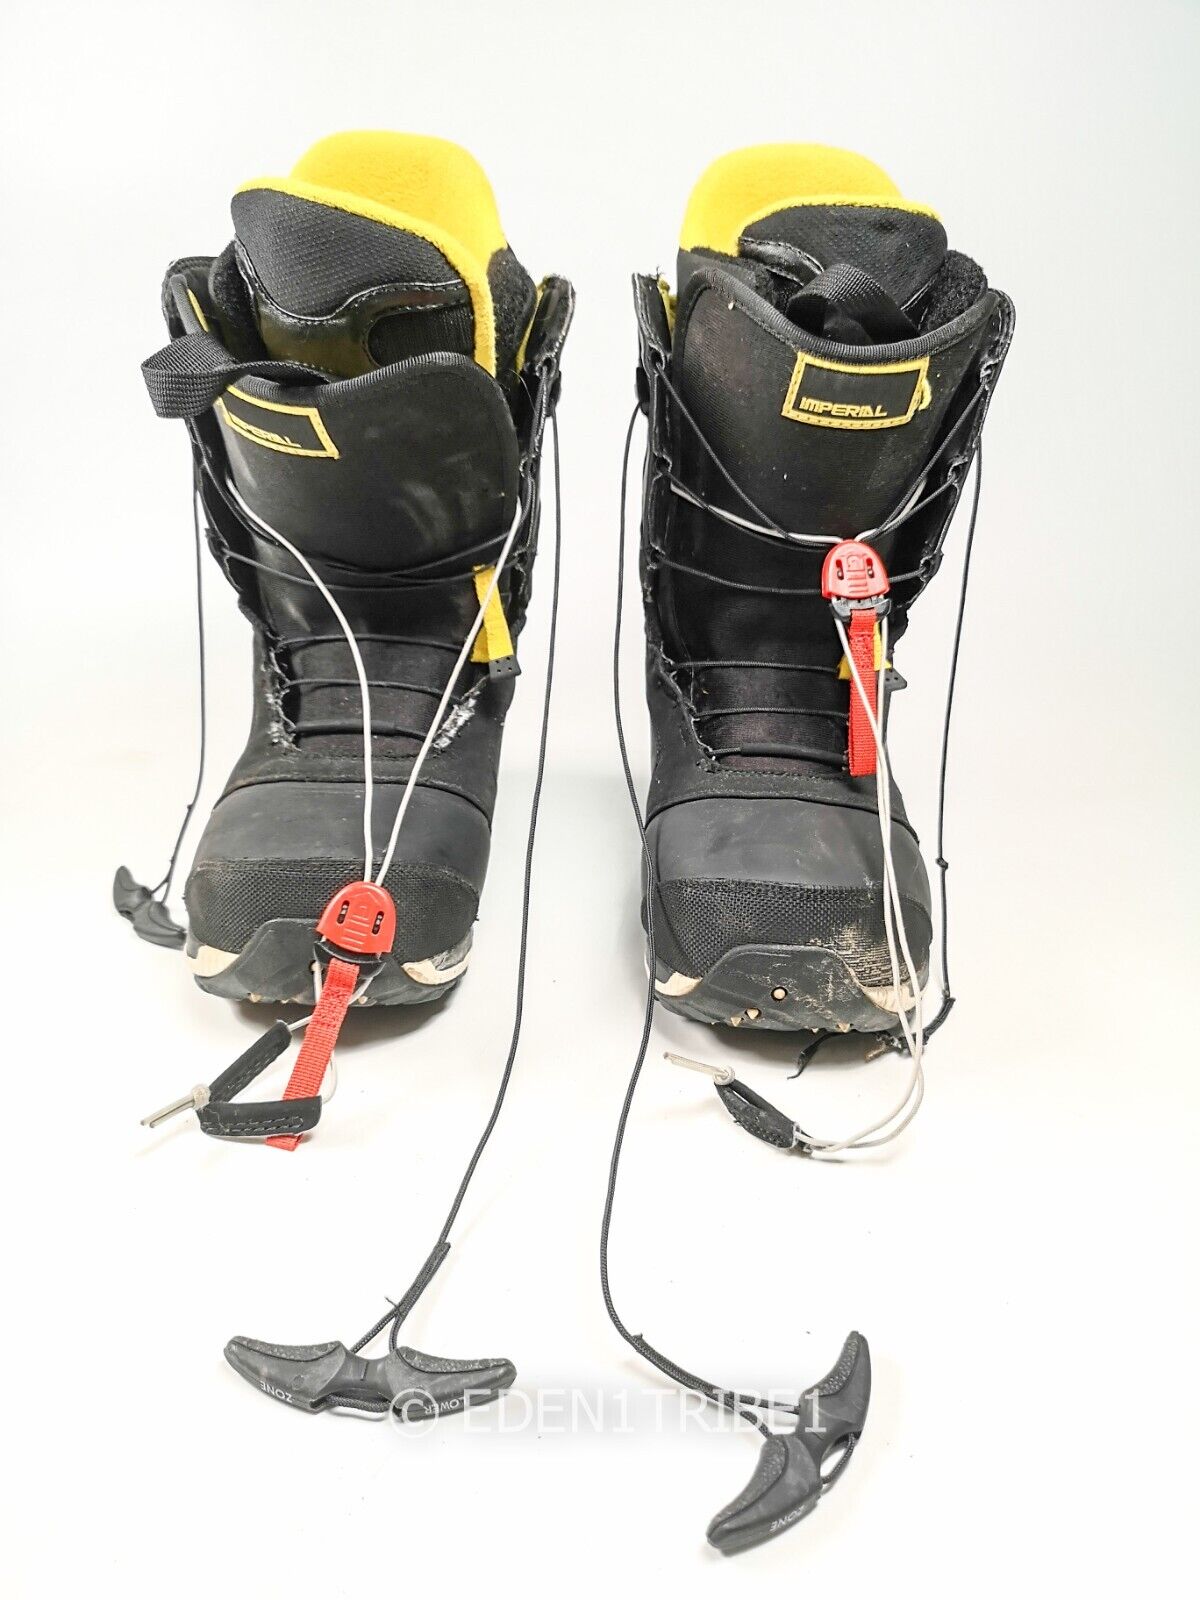 Burton Hail - Imprint 3 - Snowboard Boots Men's Size 10.5 のeBay